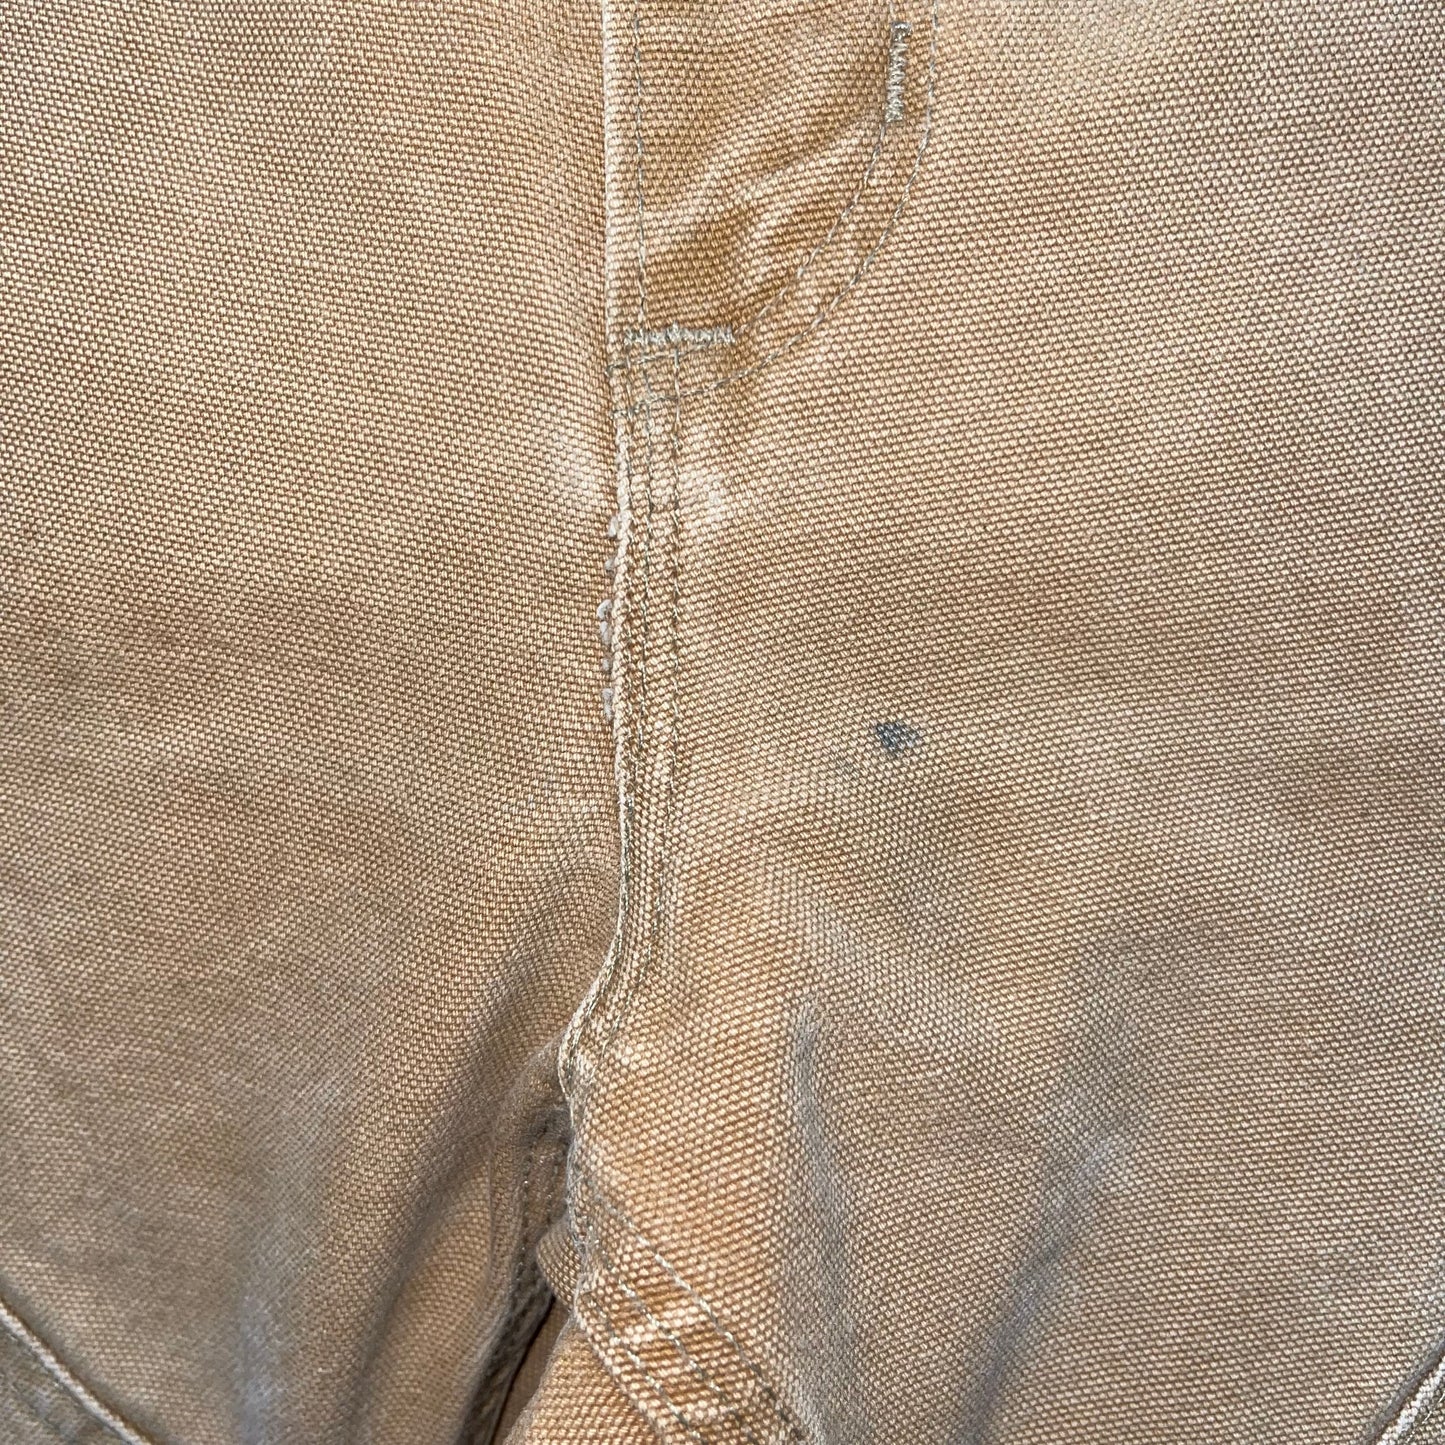 Vintage Carhartt Double Knee Pants. 30x34